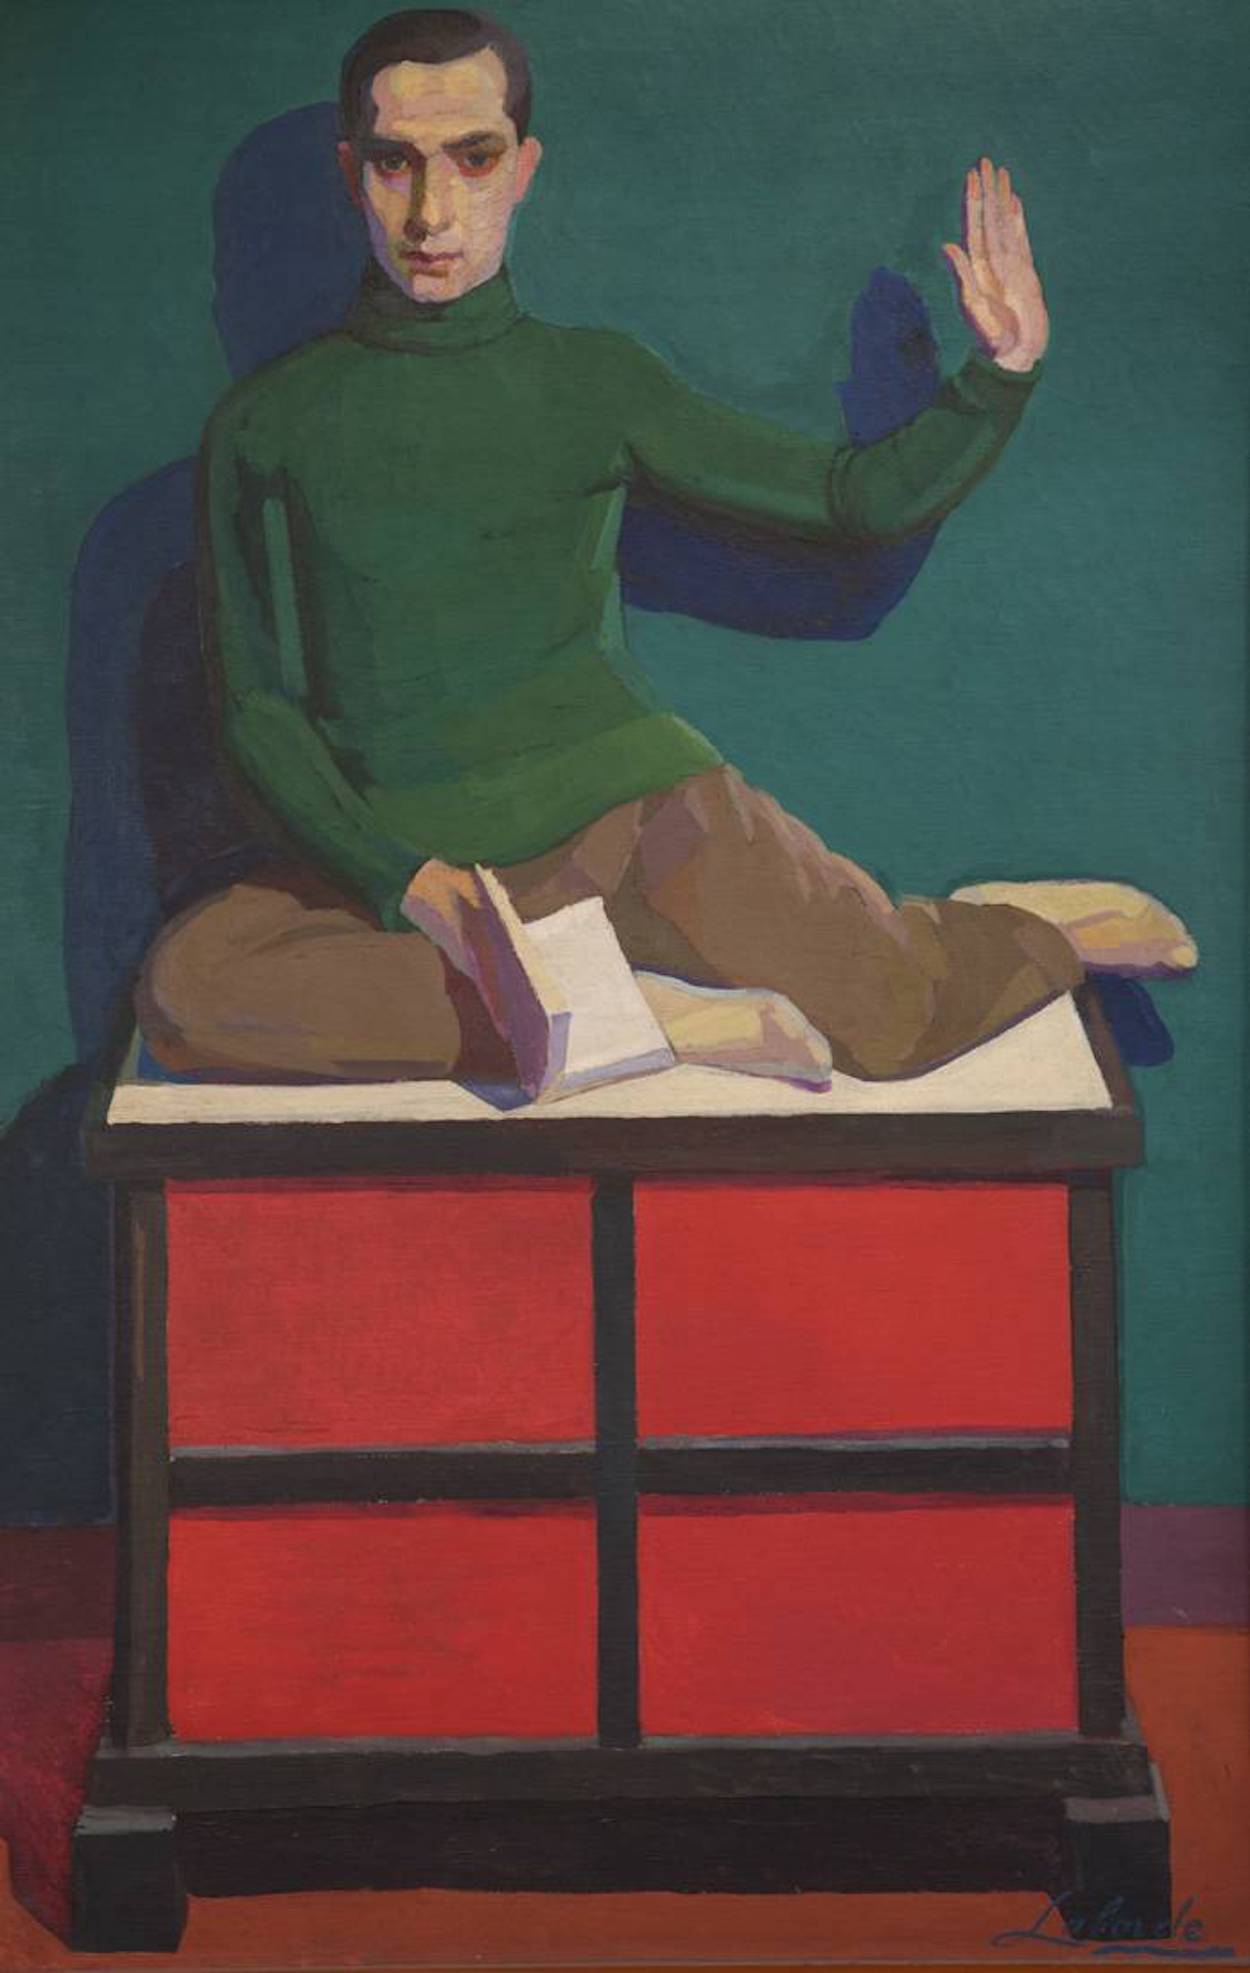 Luis E. Pombo by Guillermo Laborde - c. 1928 - 200 x 250 cm Museo Nacional de Artes Visuales